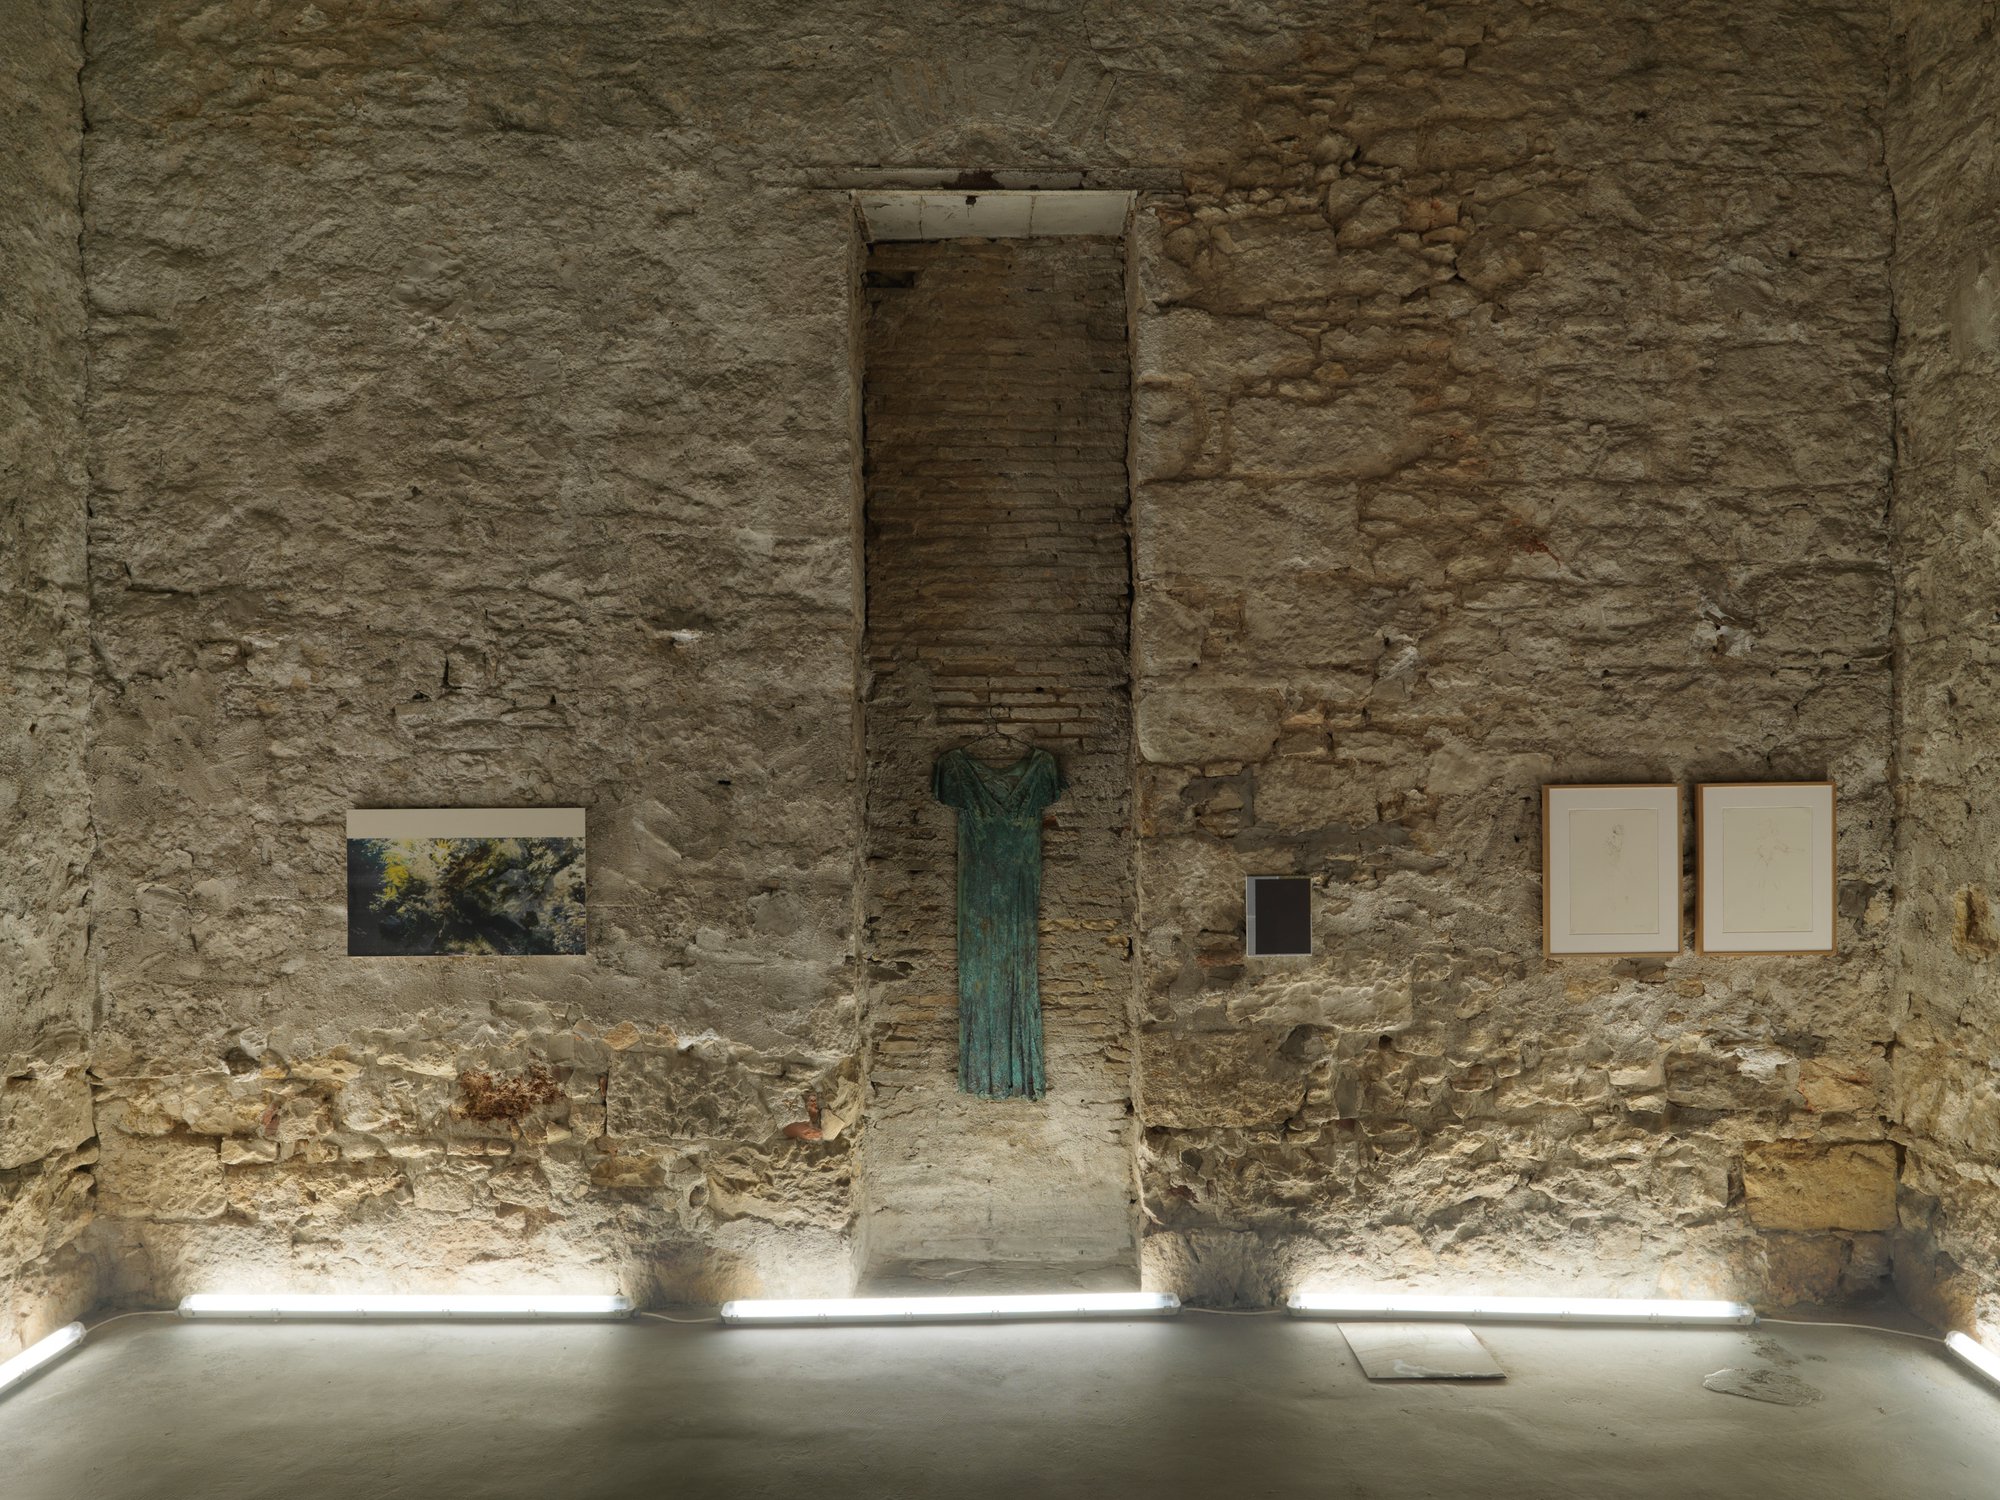 Installation view, Nεοκλασσικό, Rodeo, Piraeus, 2022